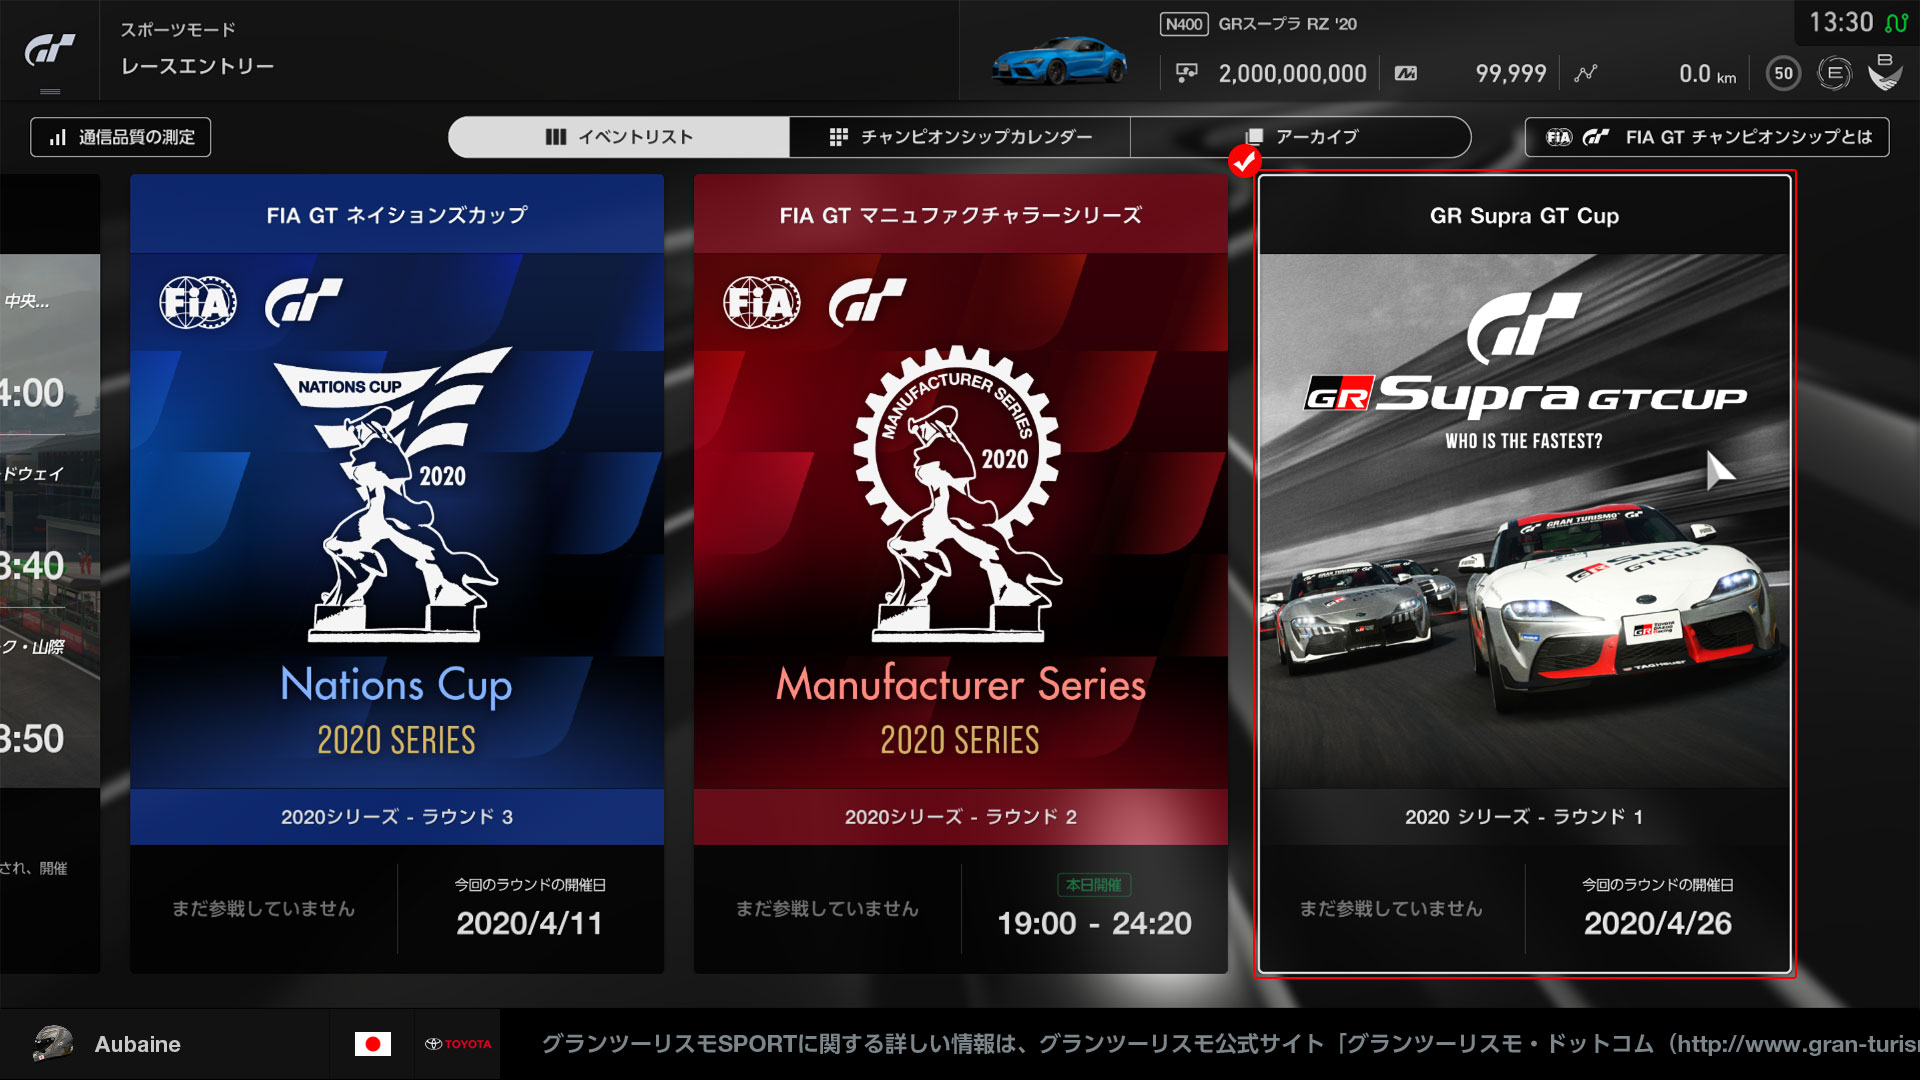 GR Supra GT Cupを選択